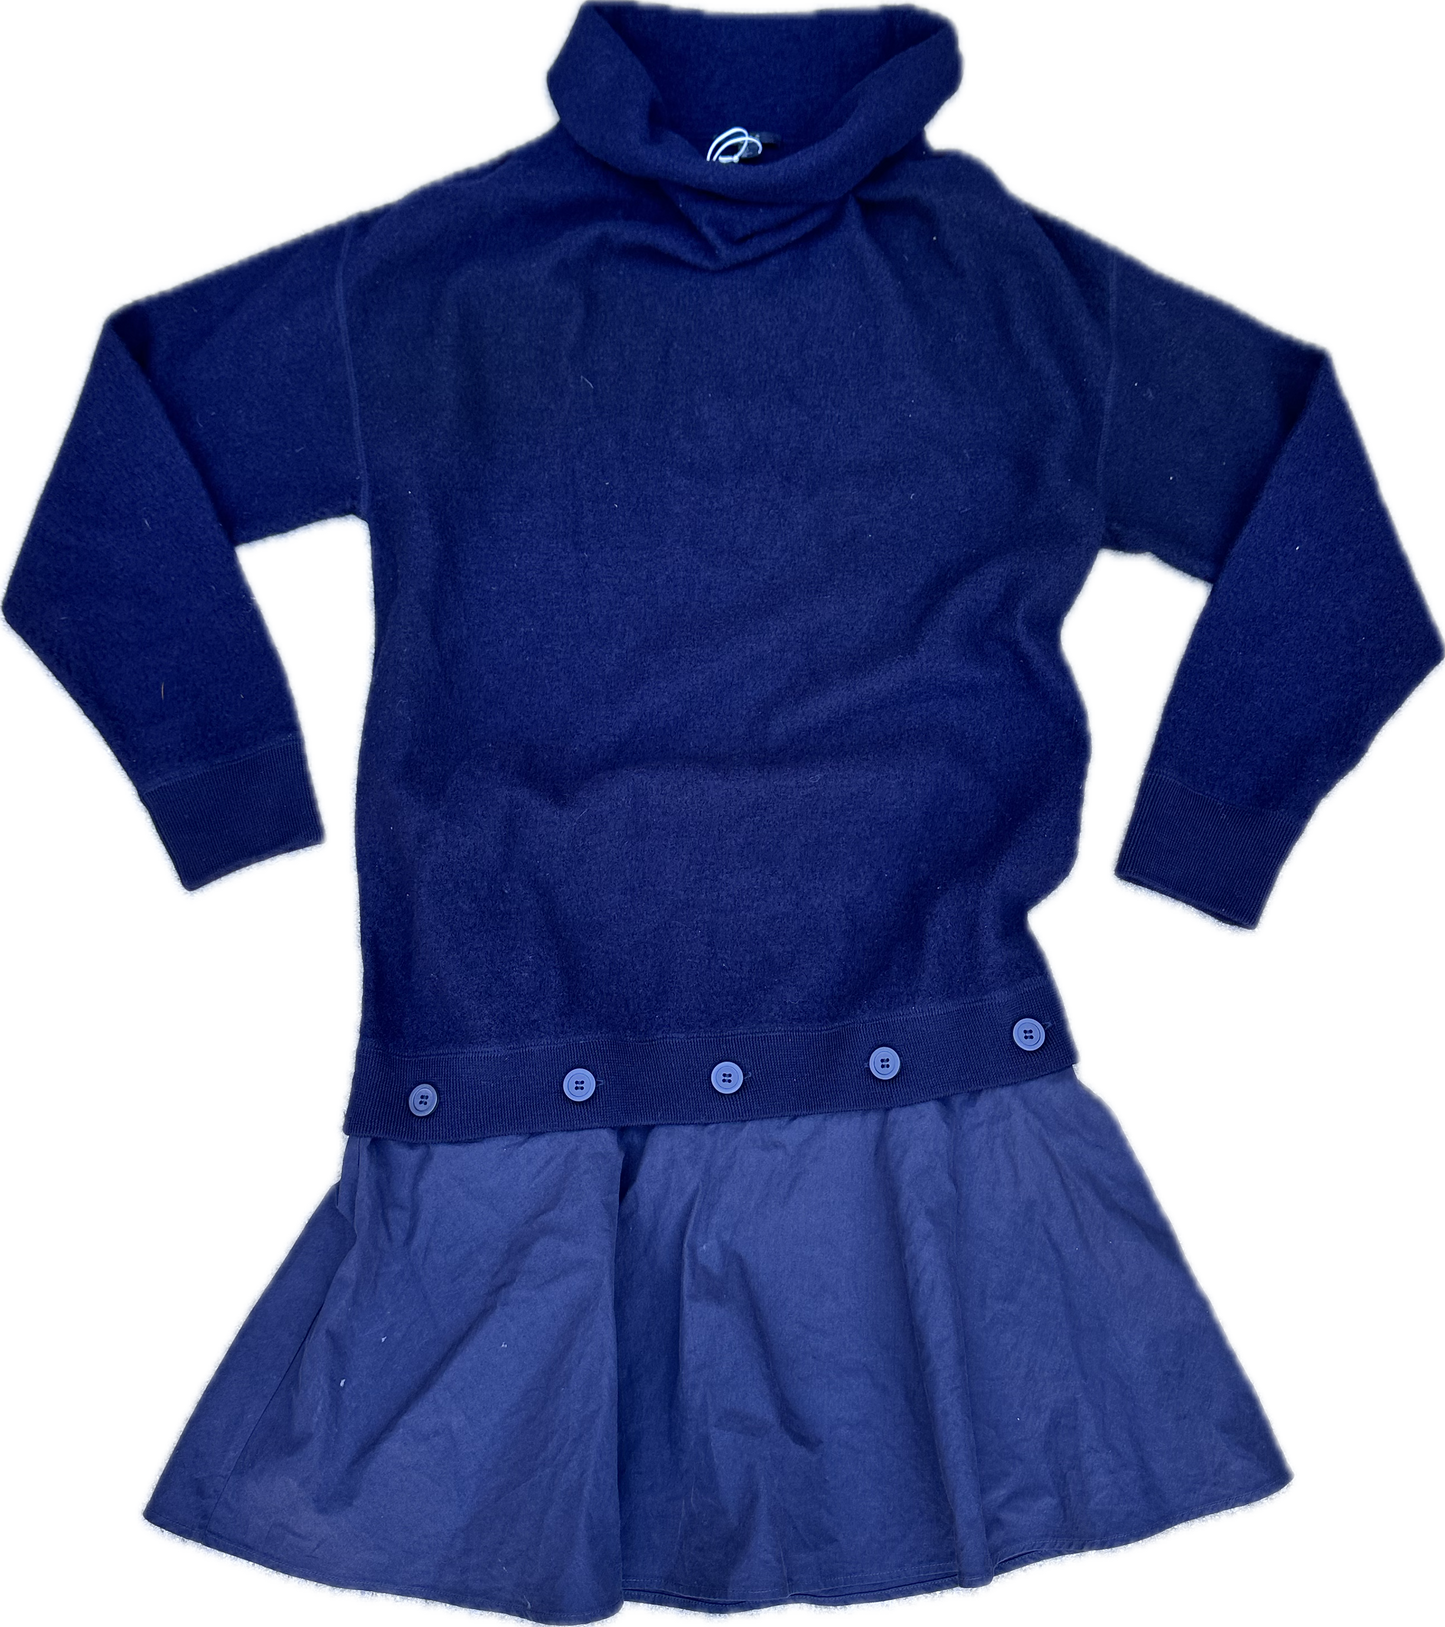 30 Rock: Liz Lemon's COS Navy Blue Dress (2)